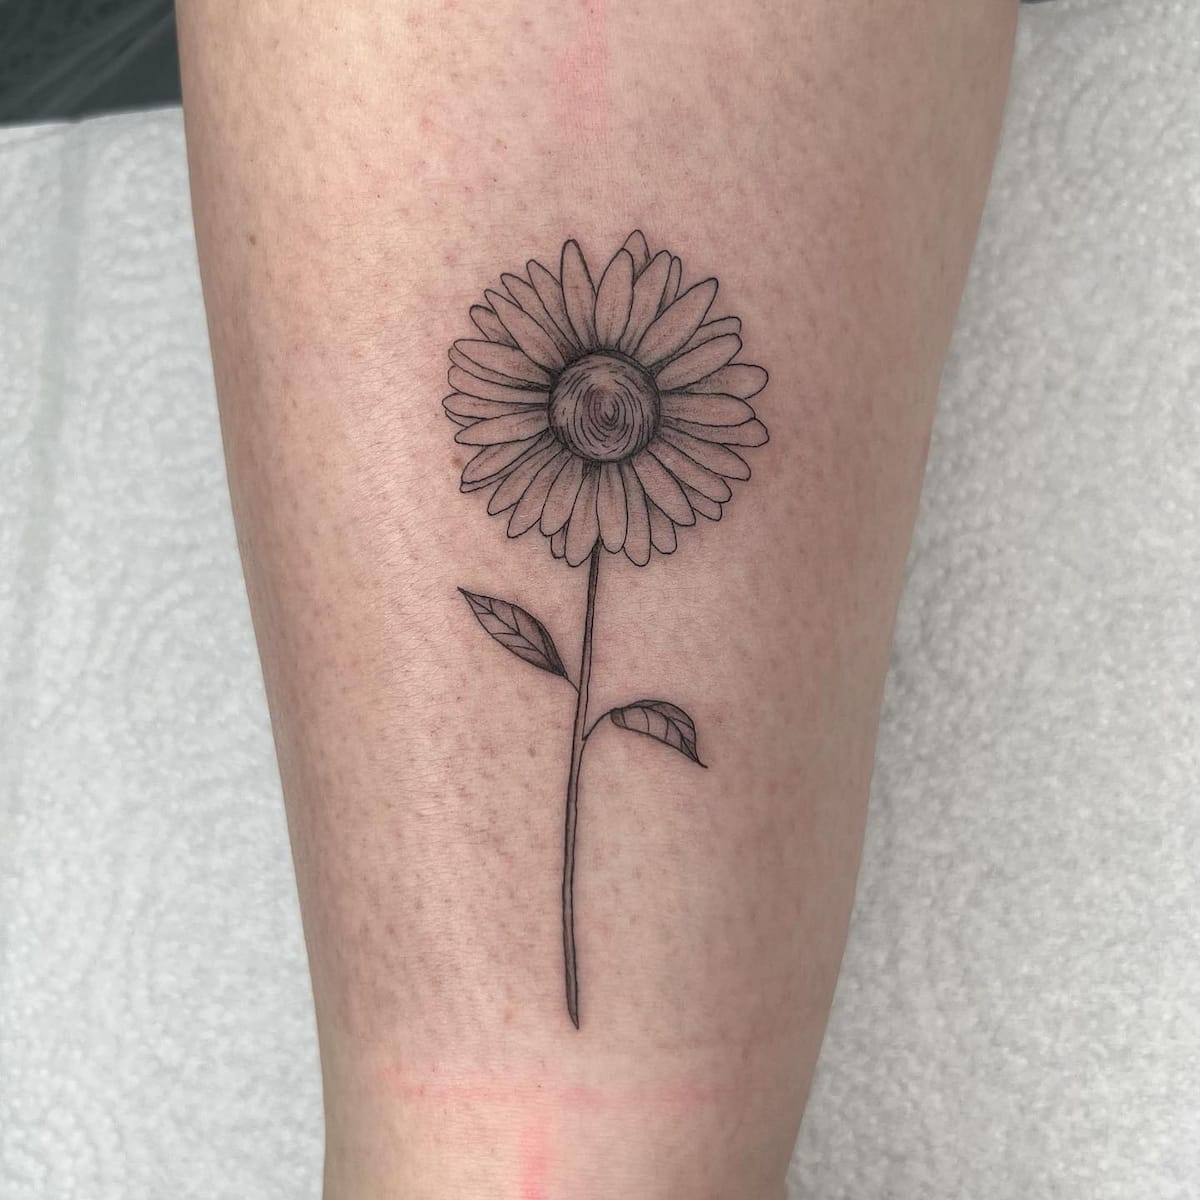 Minimalist daisy flower tattoo on the hand.